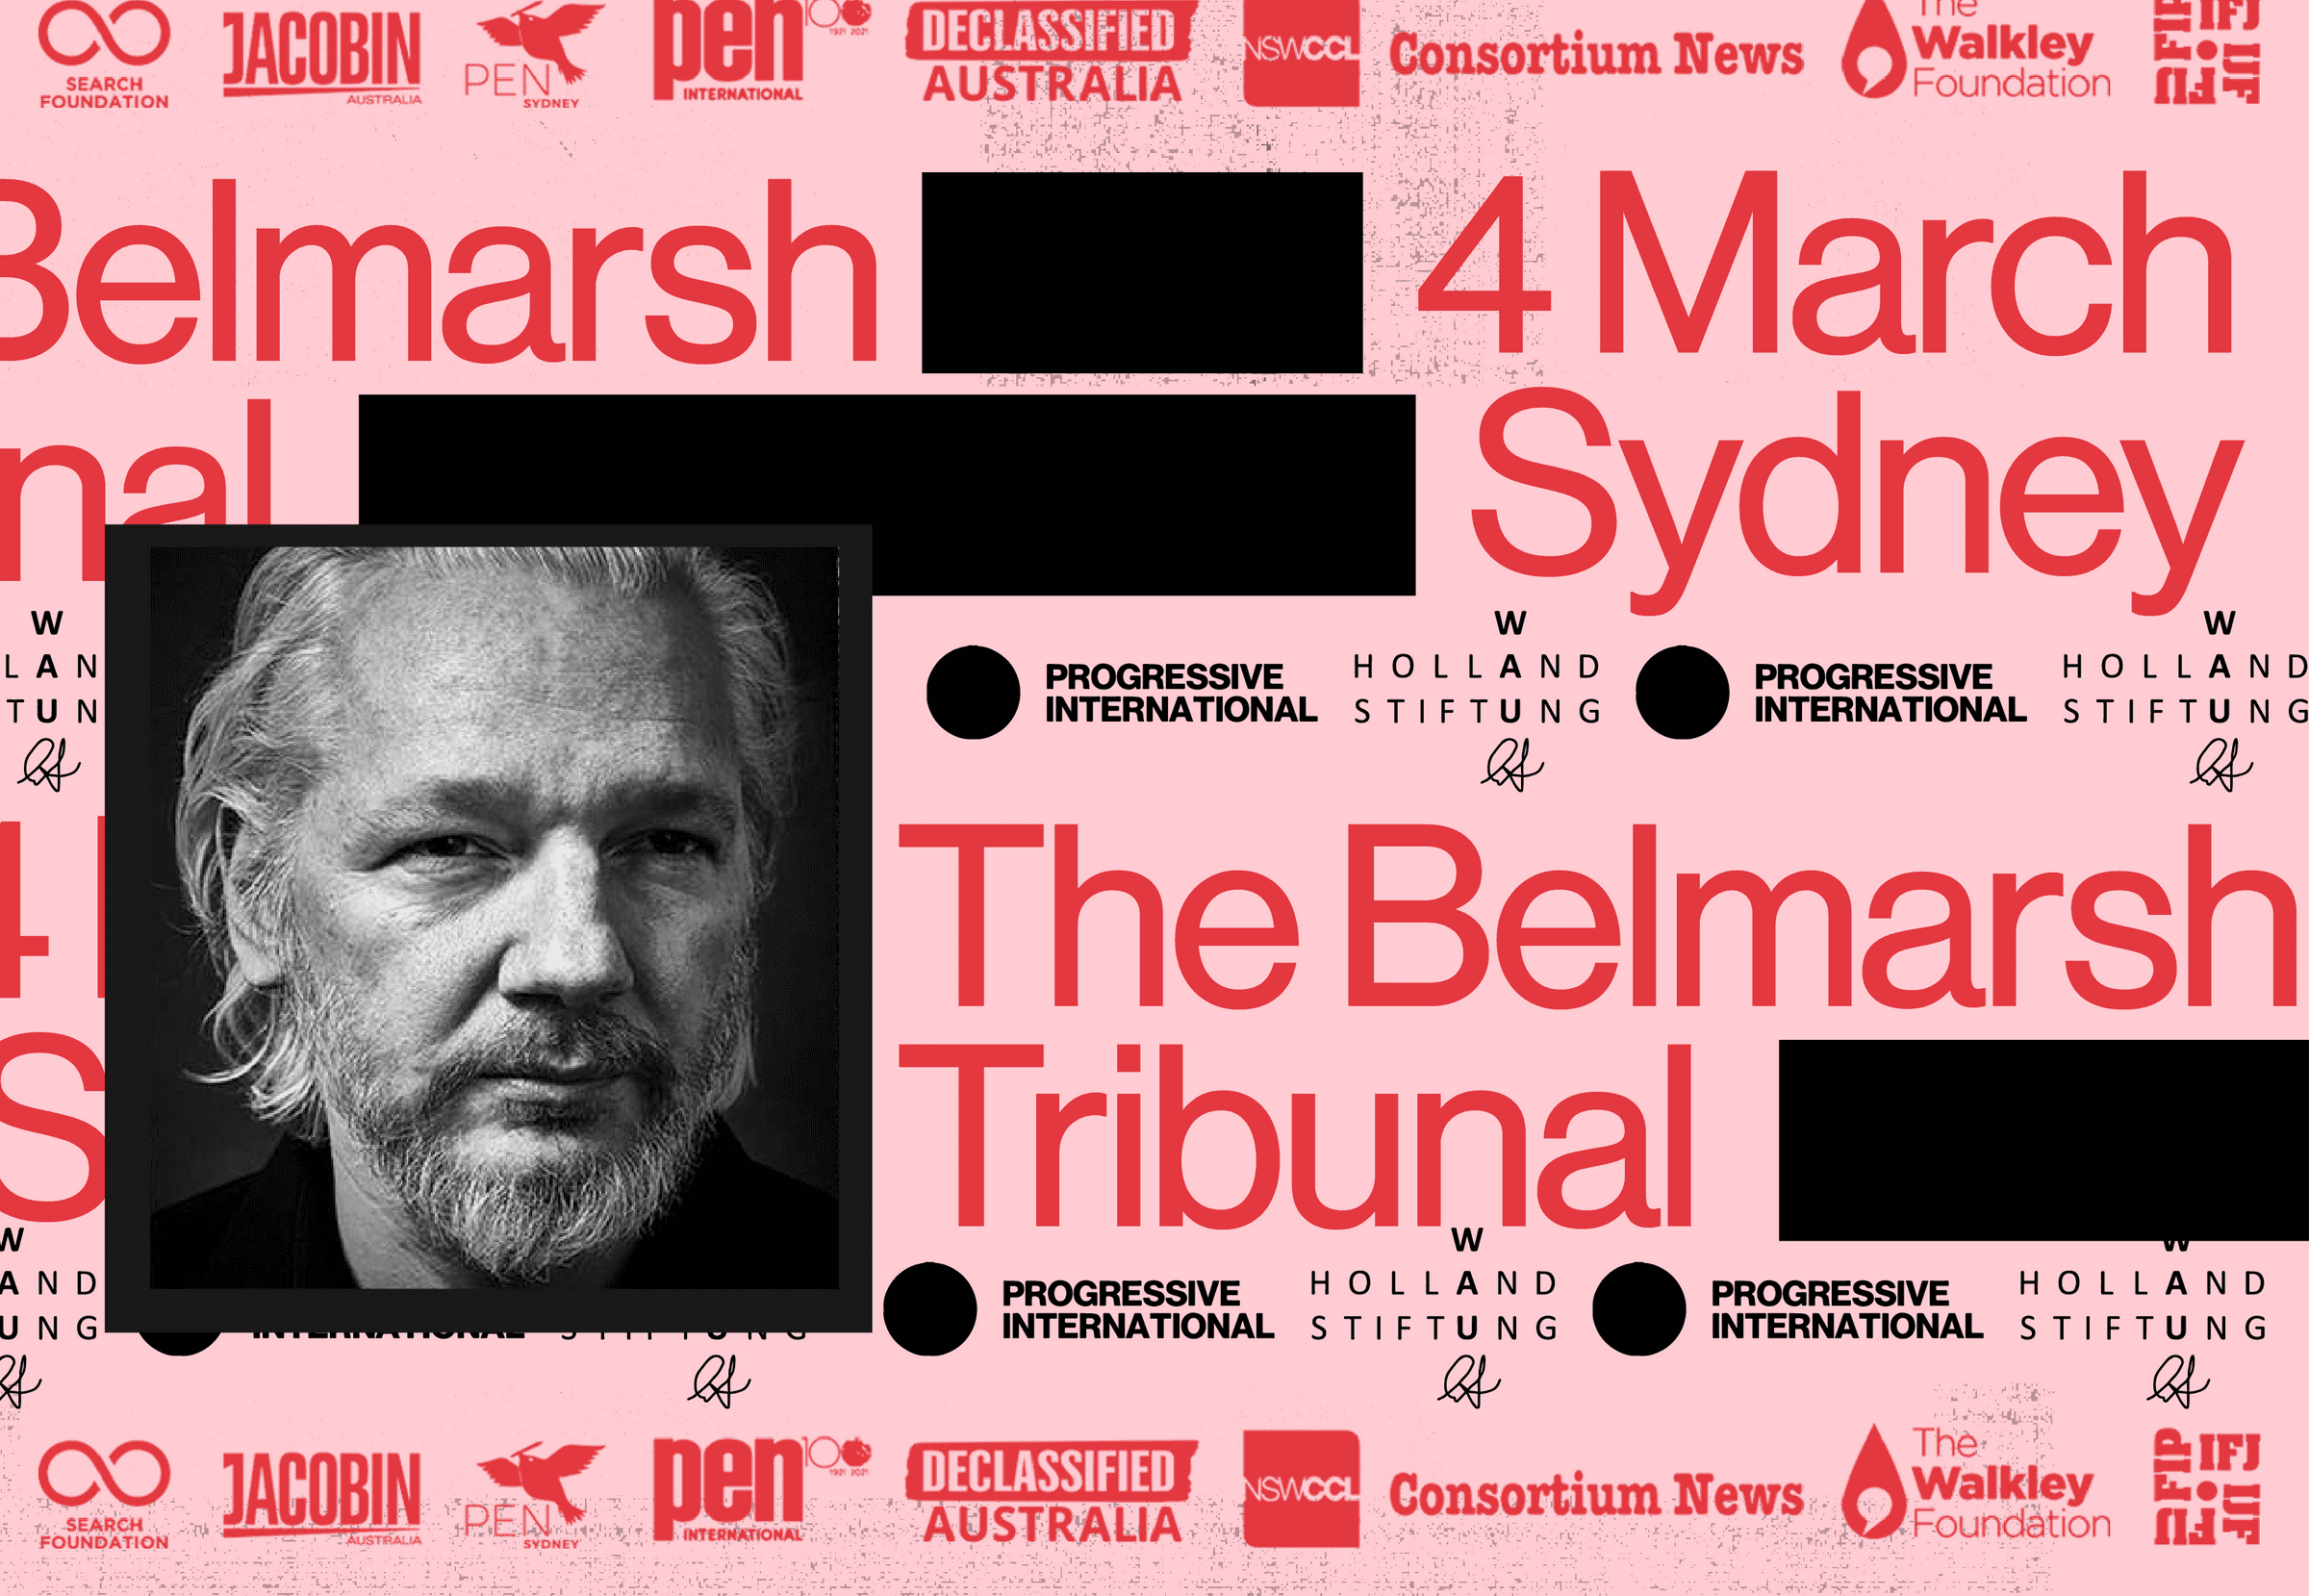 TUNE IN: Belmarsh Tribunal In Sydney, Australia